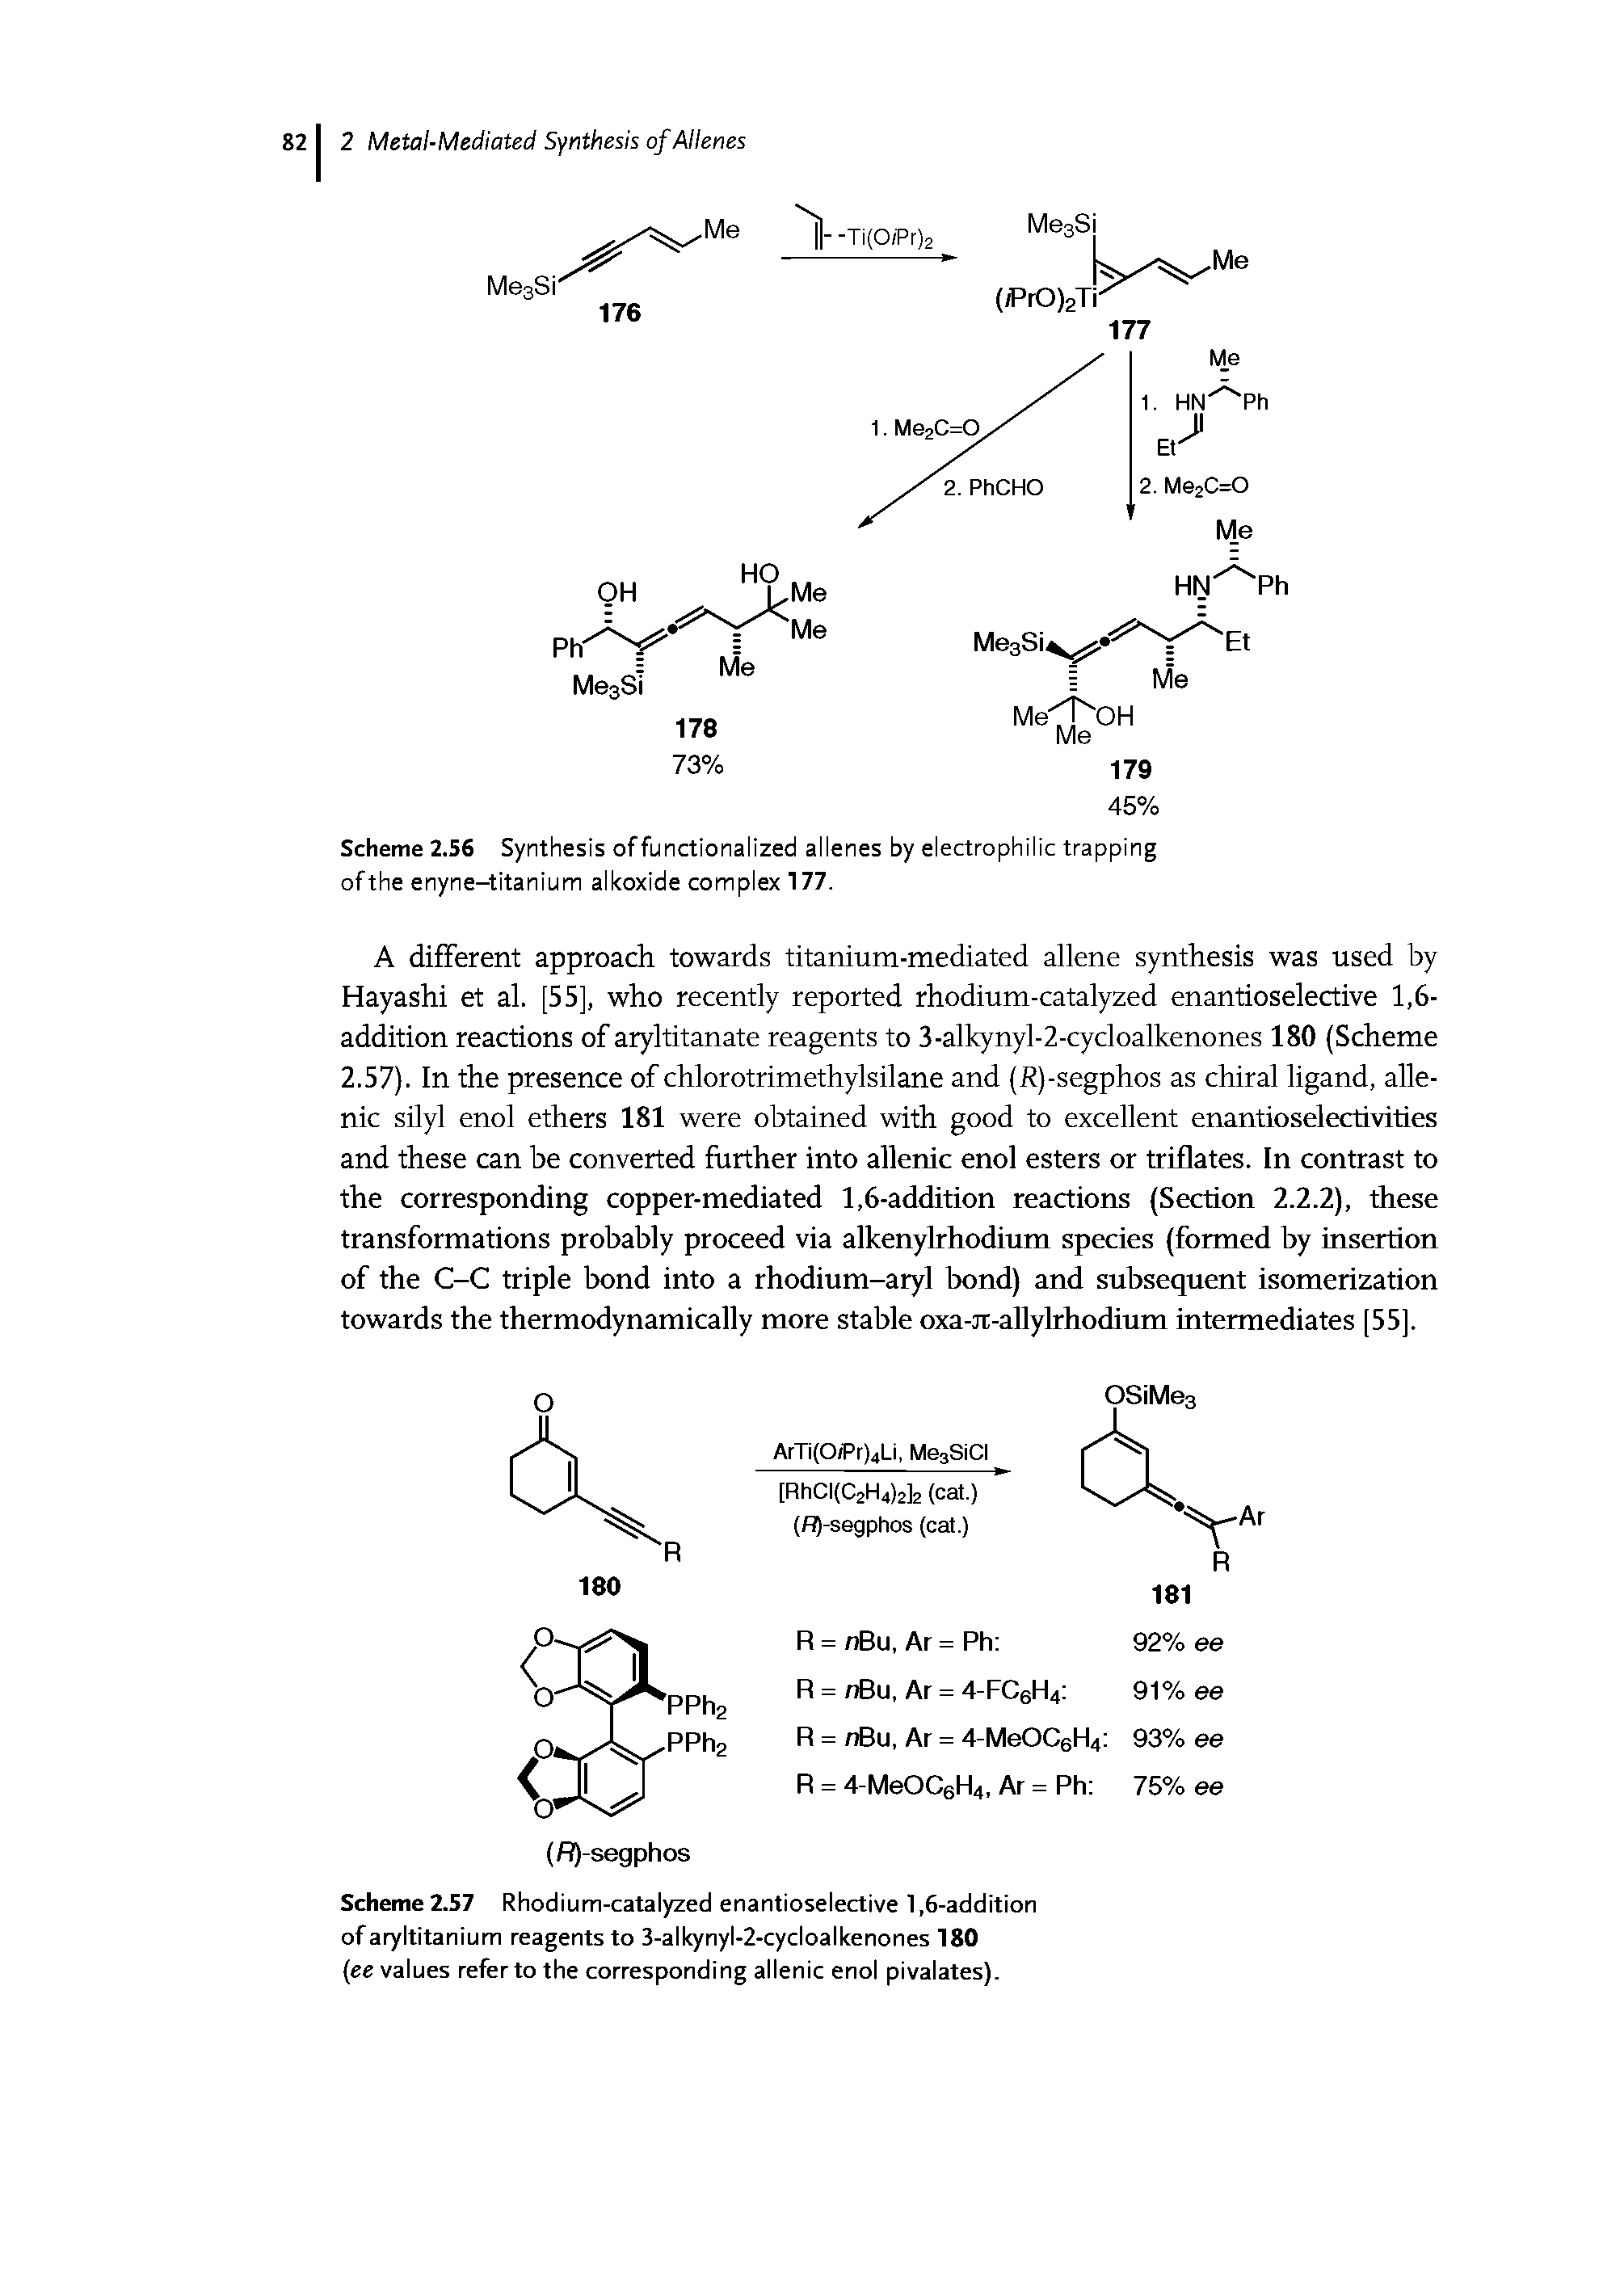 Scheme 2.57 Rhodium-catalyzed enantioselective 1,6-addition of aryltitanium reagents to 3-alkynyl-2-cycloalkenones 180 (ee values referto the corresponding allenic enol pivalates).